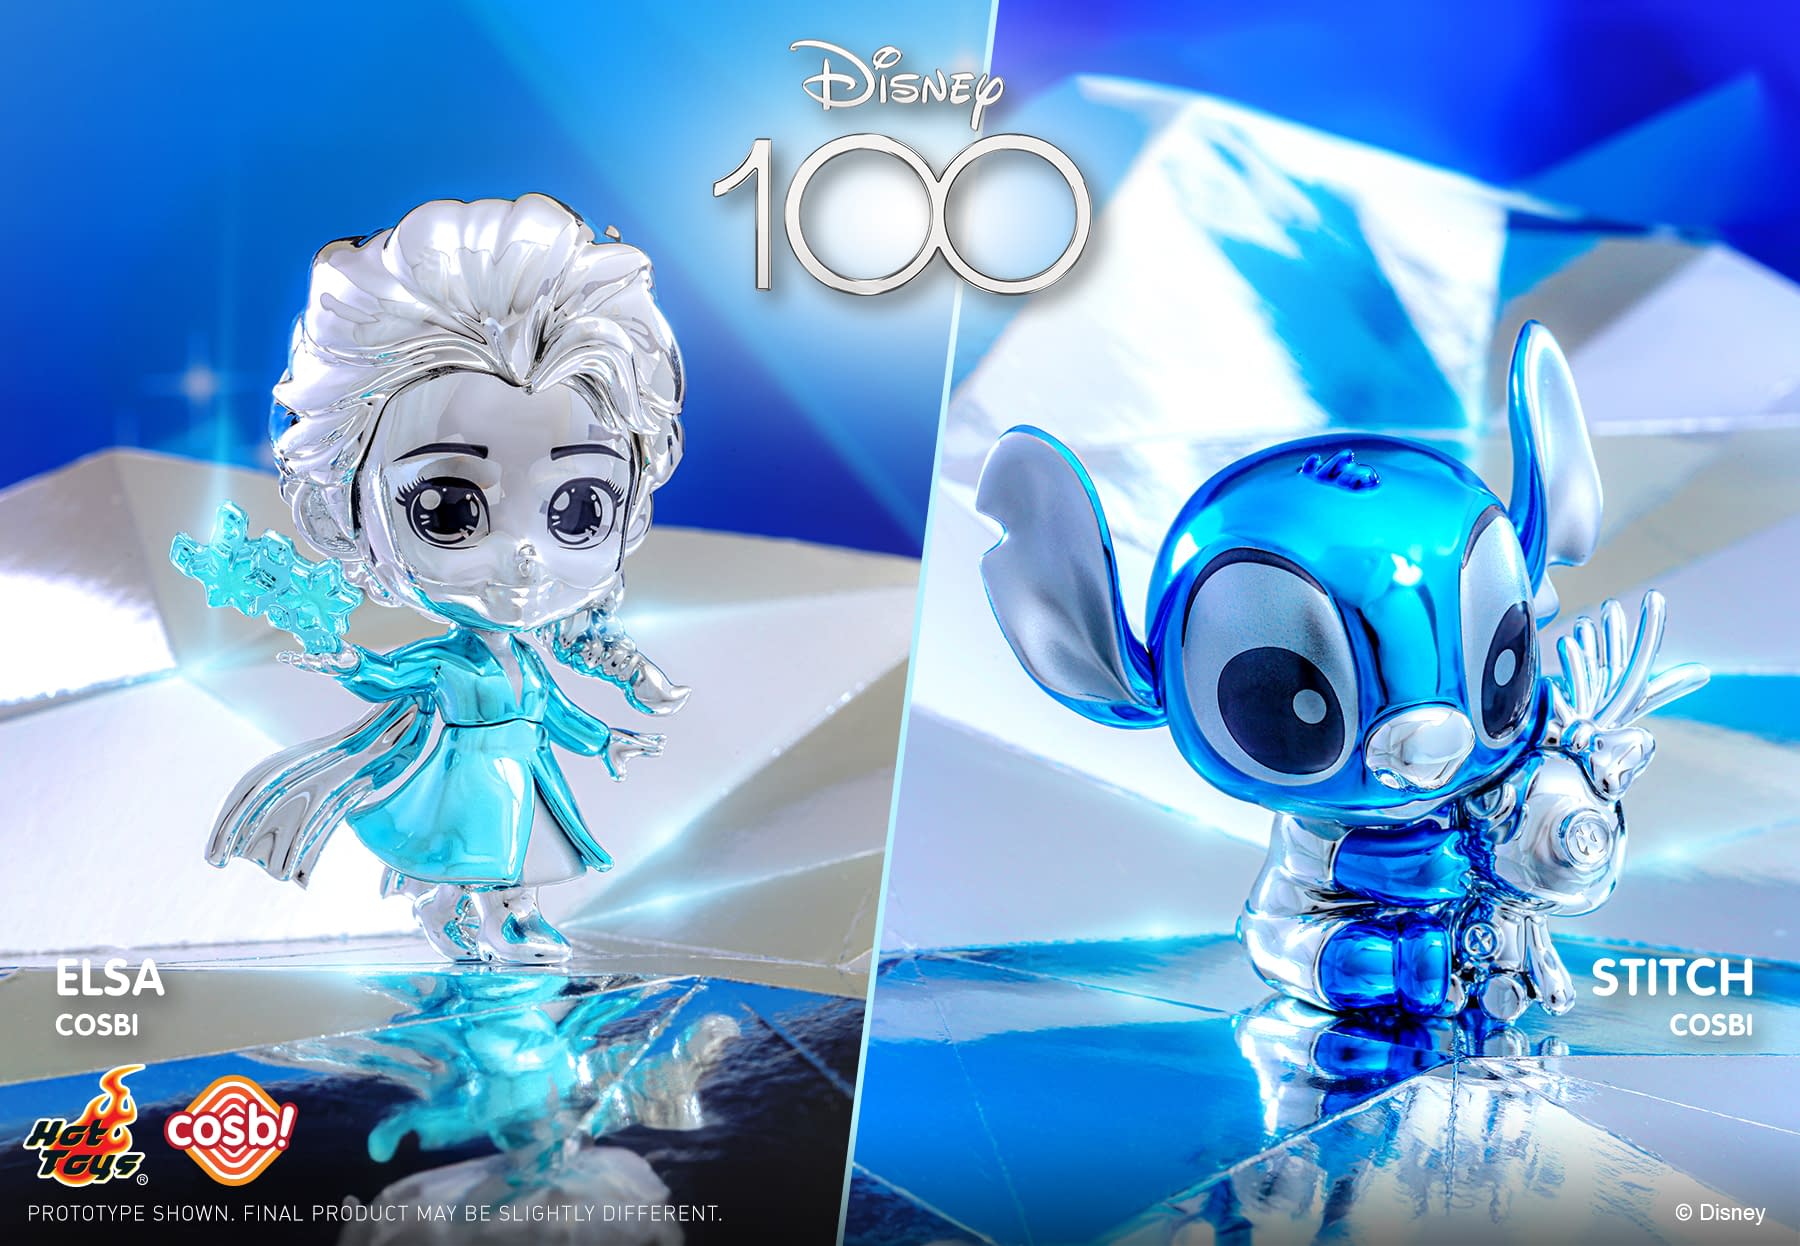 Hot Toys Unveils New Disney 100 Platinum Color Cosbi Collection6